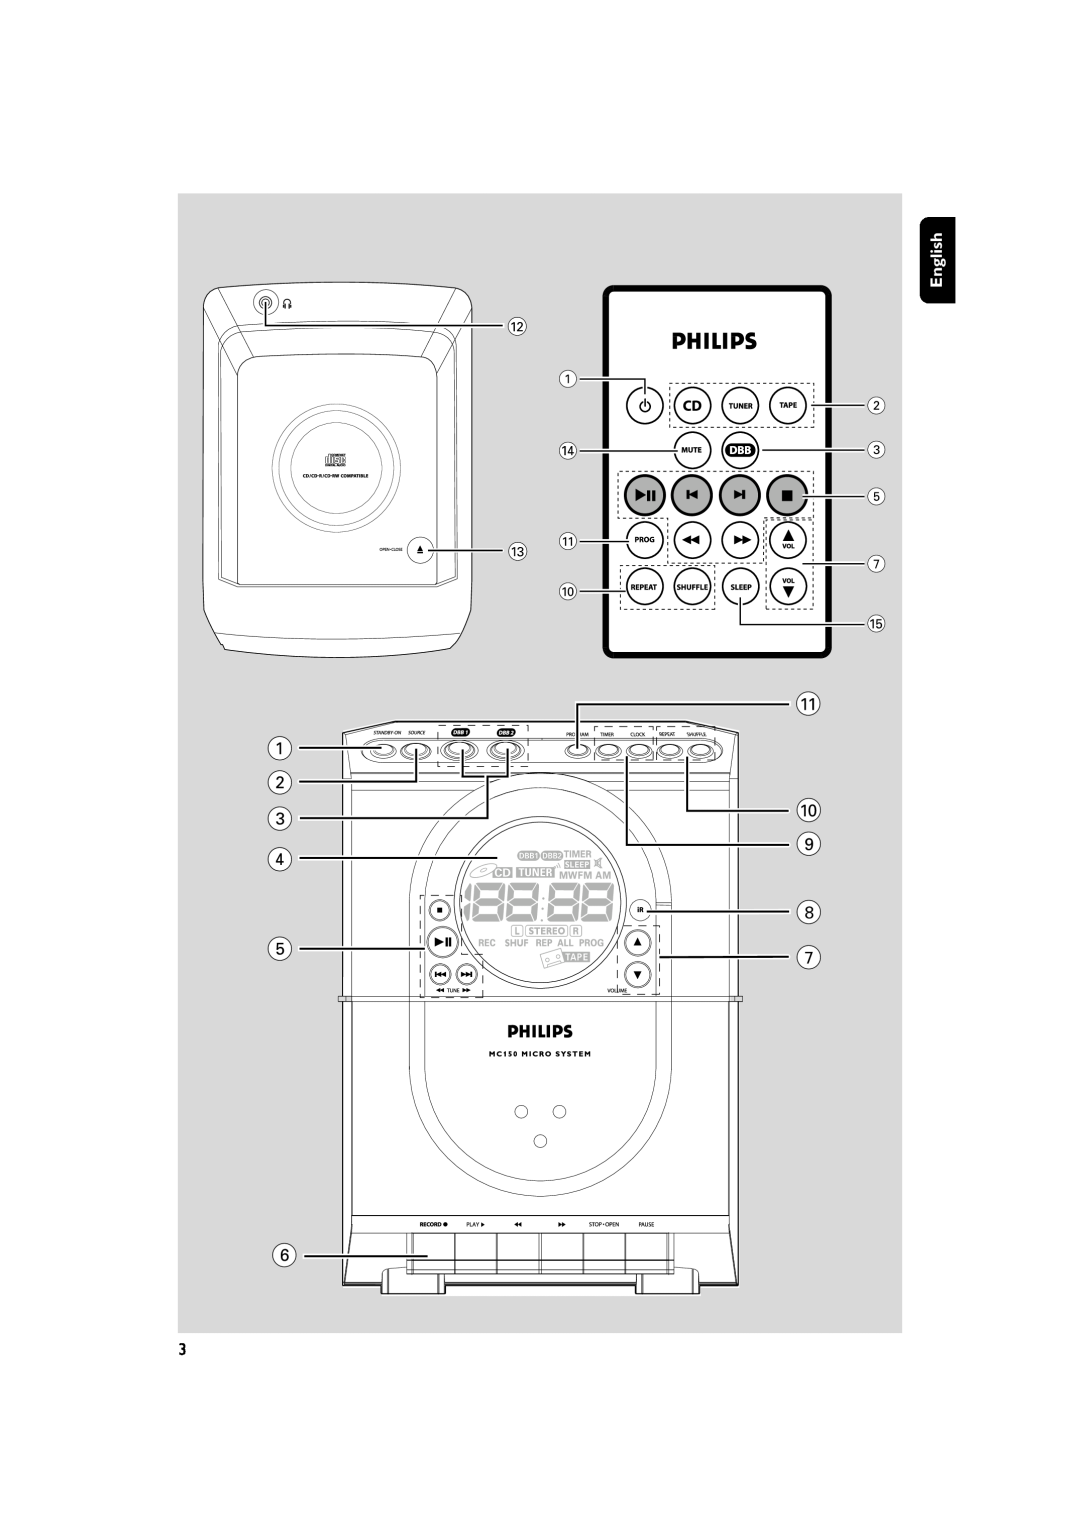 Philips MC150 manual English 